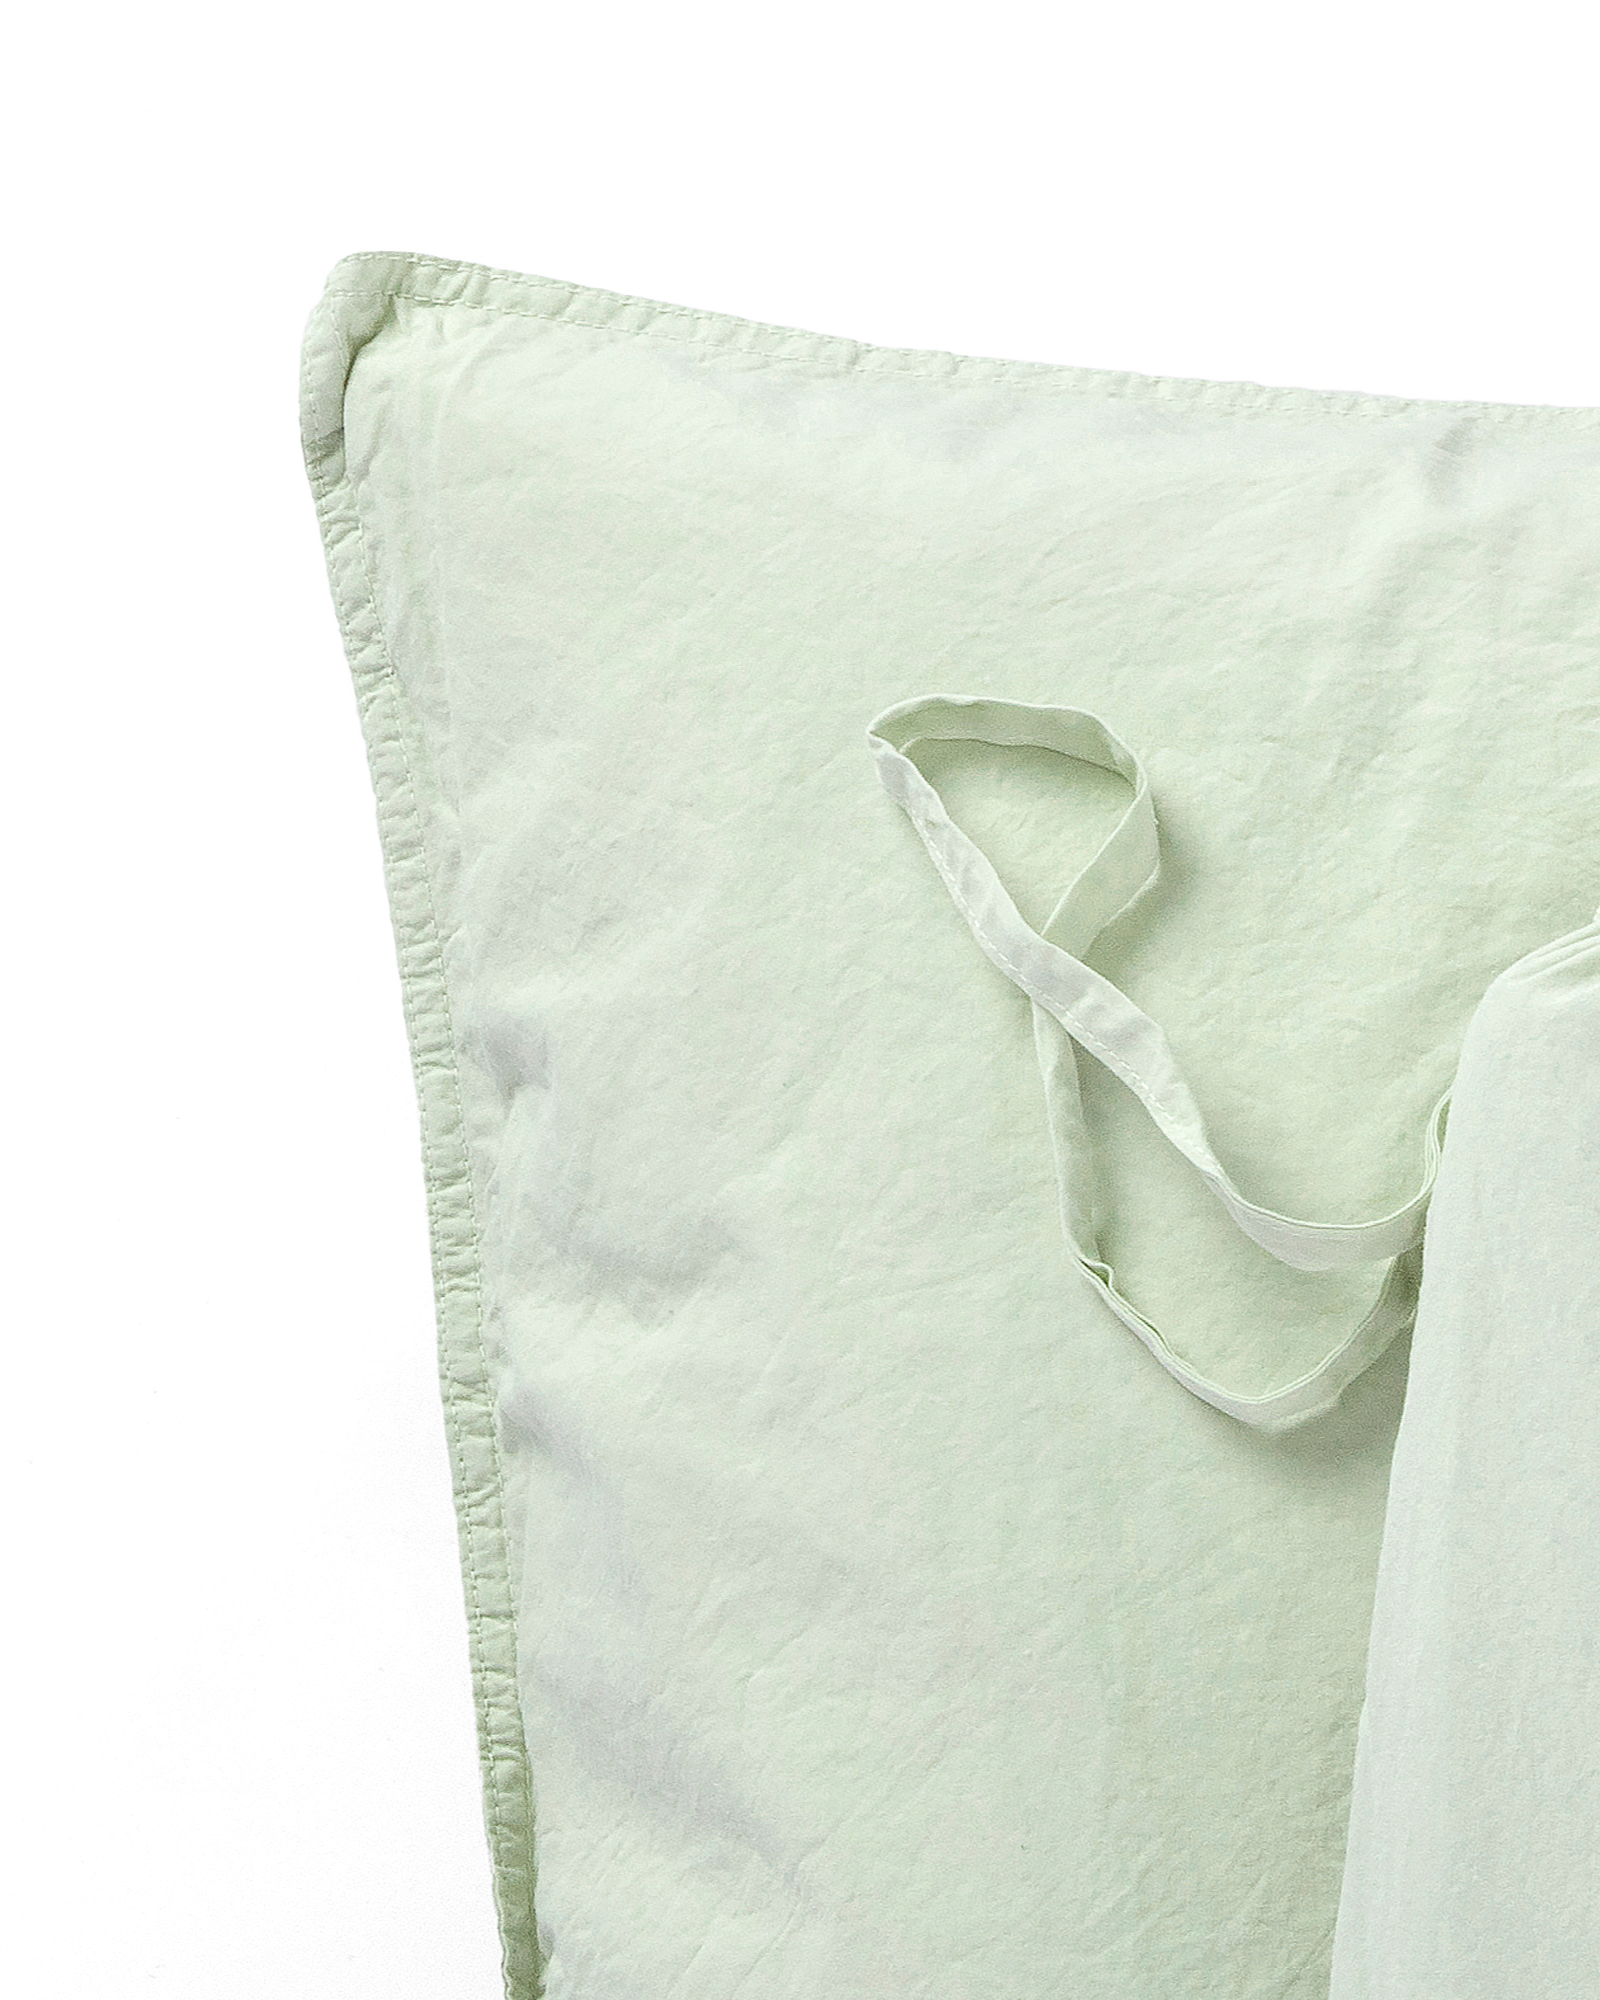 MARIE-MARIE - Pillowcase VINTAGE COTTON Green tea - 65x65 cm - Green tea